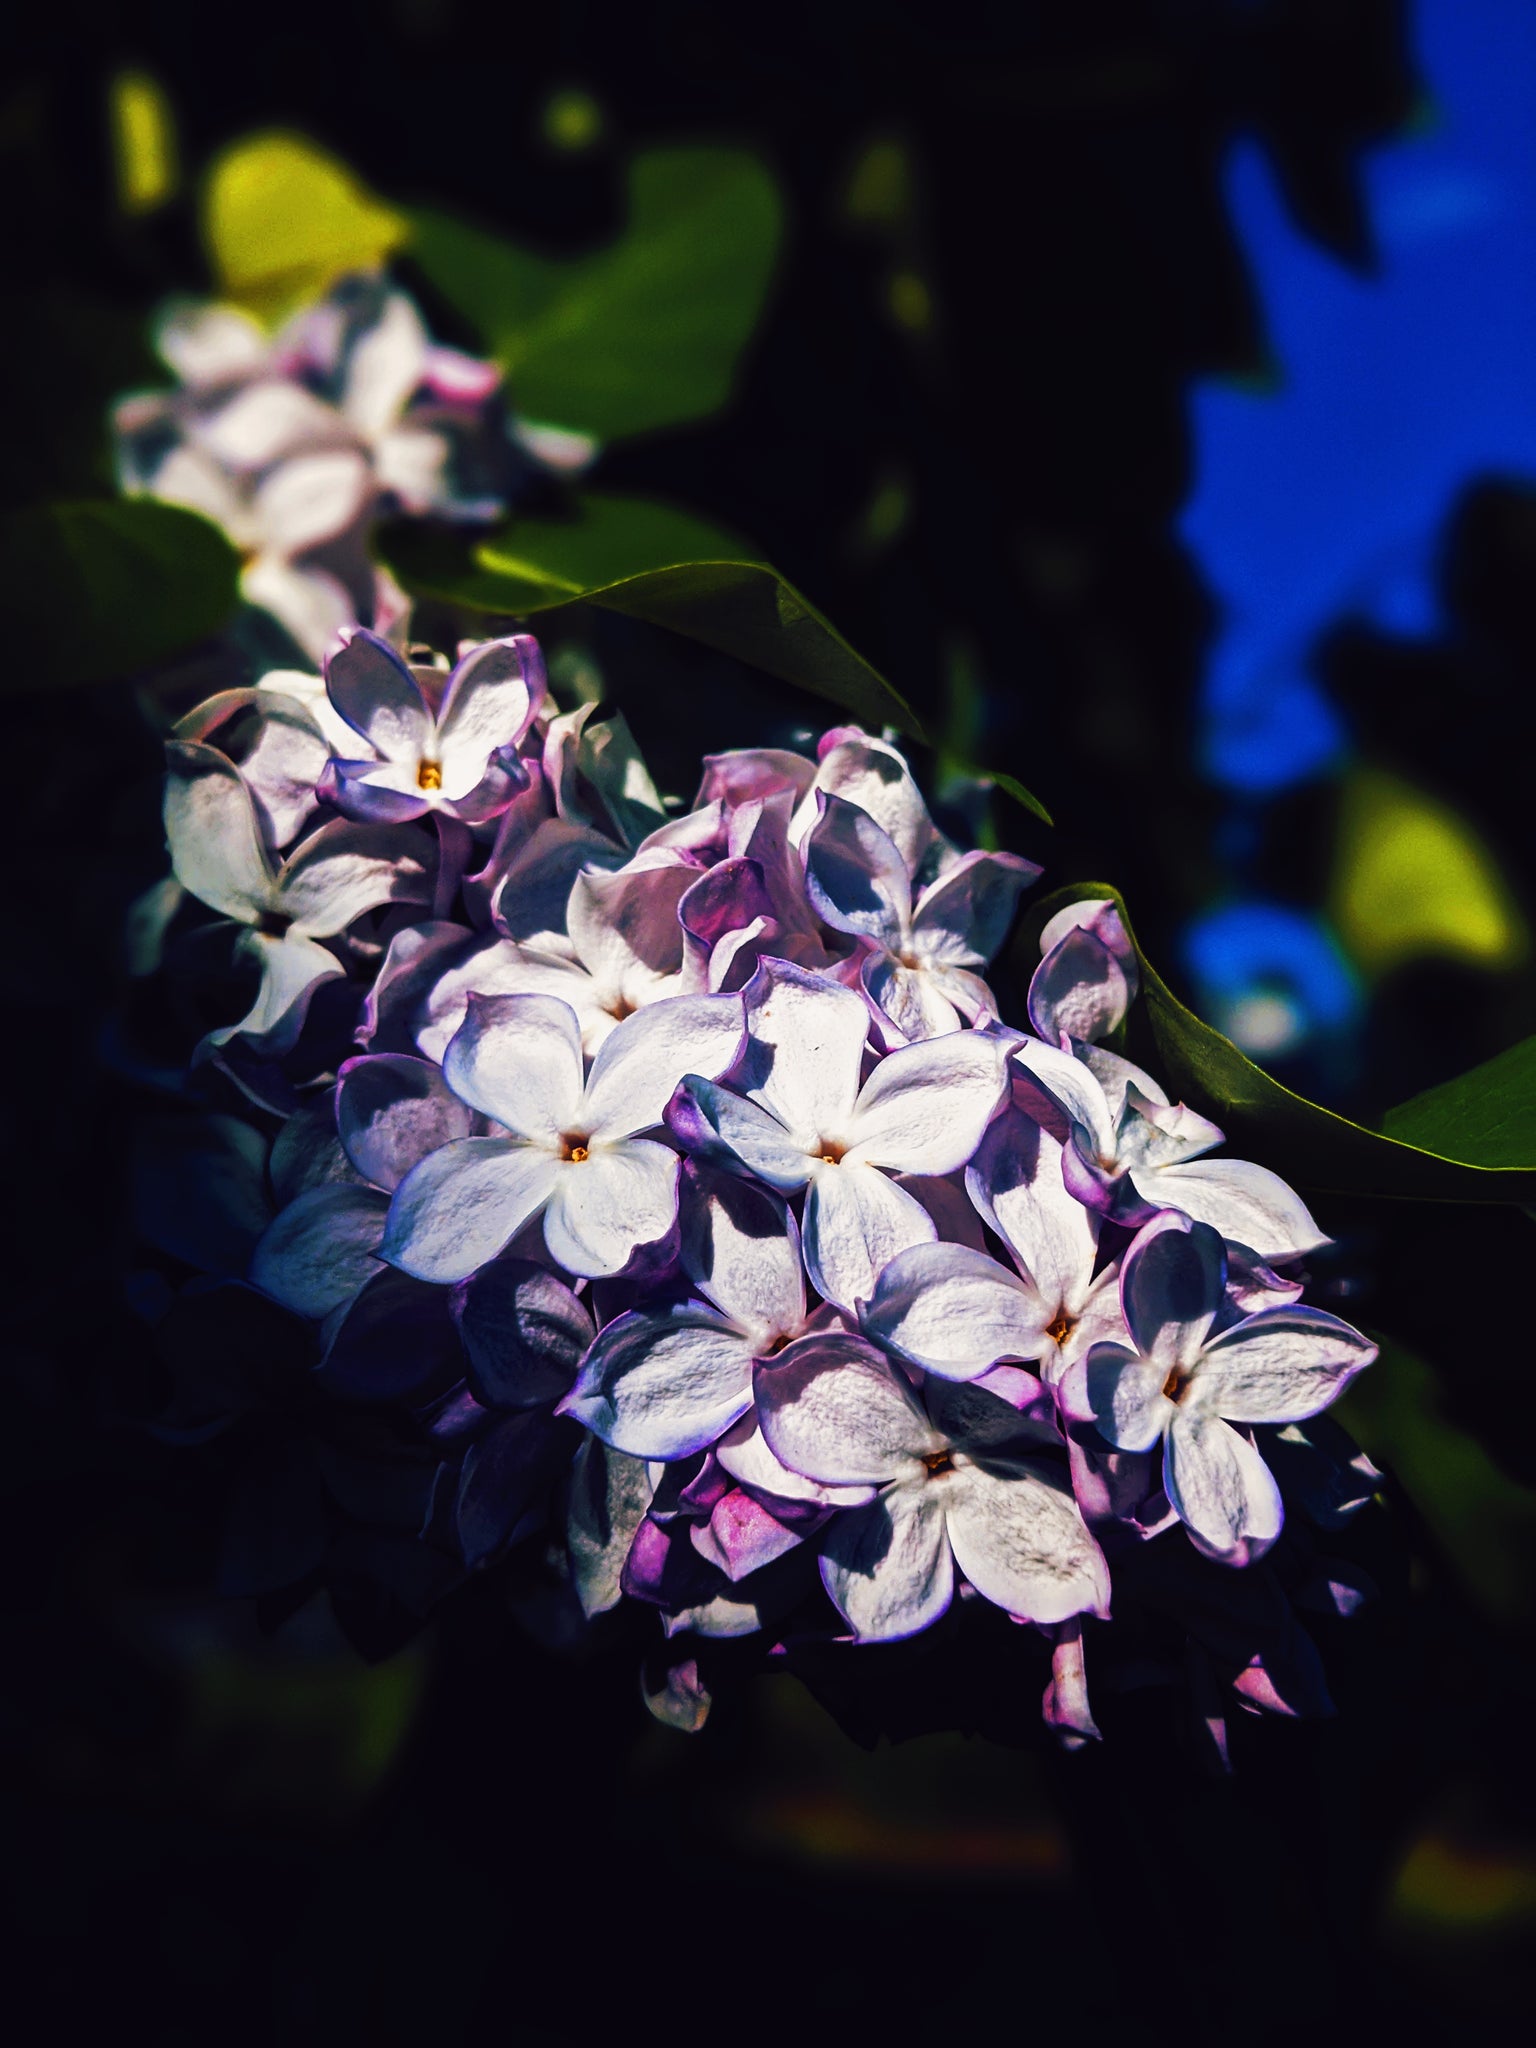 Lilac Perfume. Organic Enfleurage Extrait by Wild Veil.